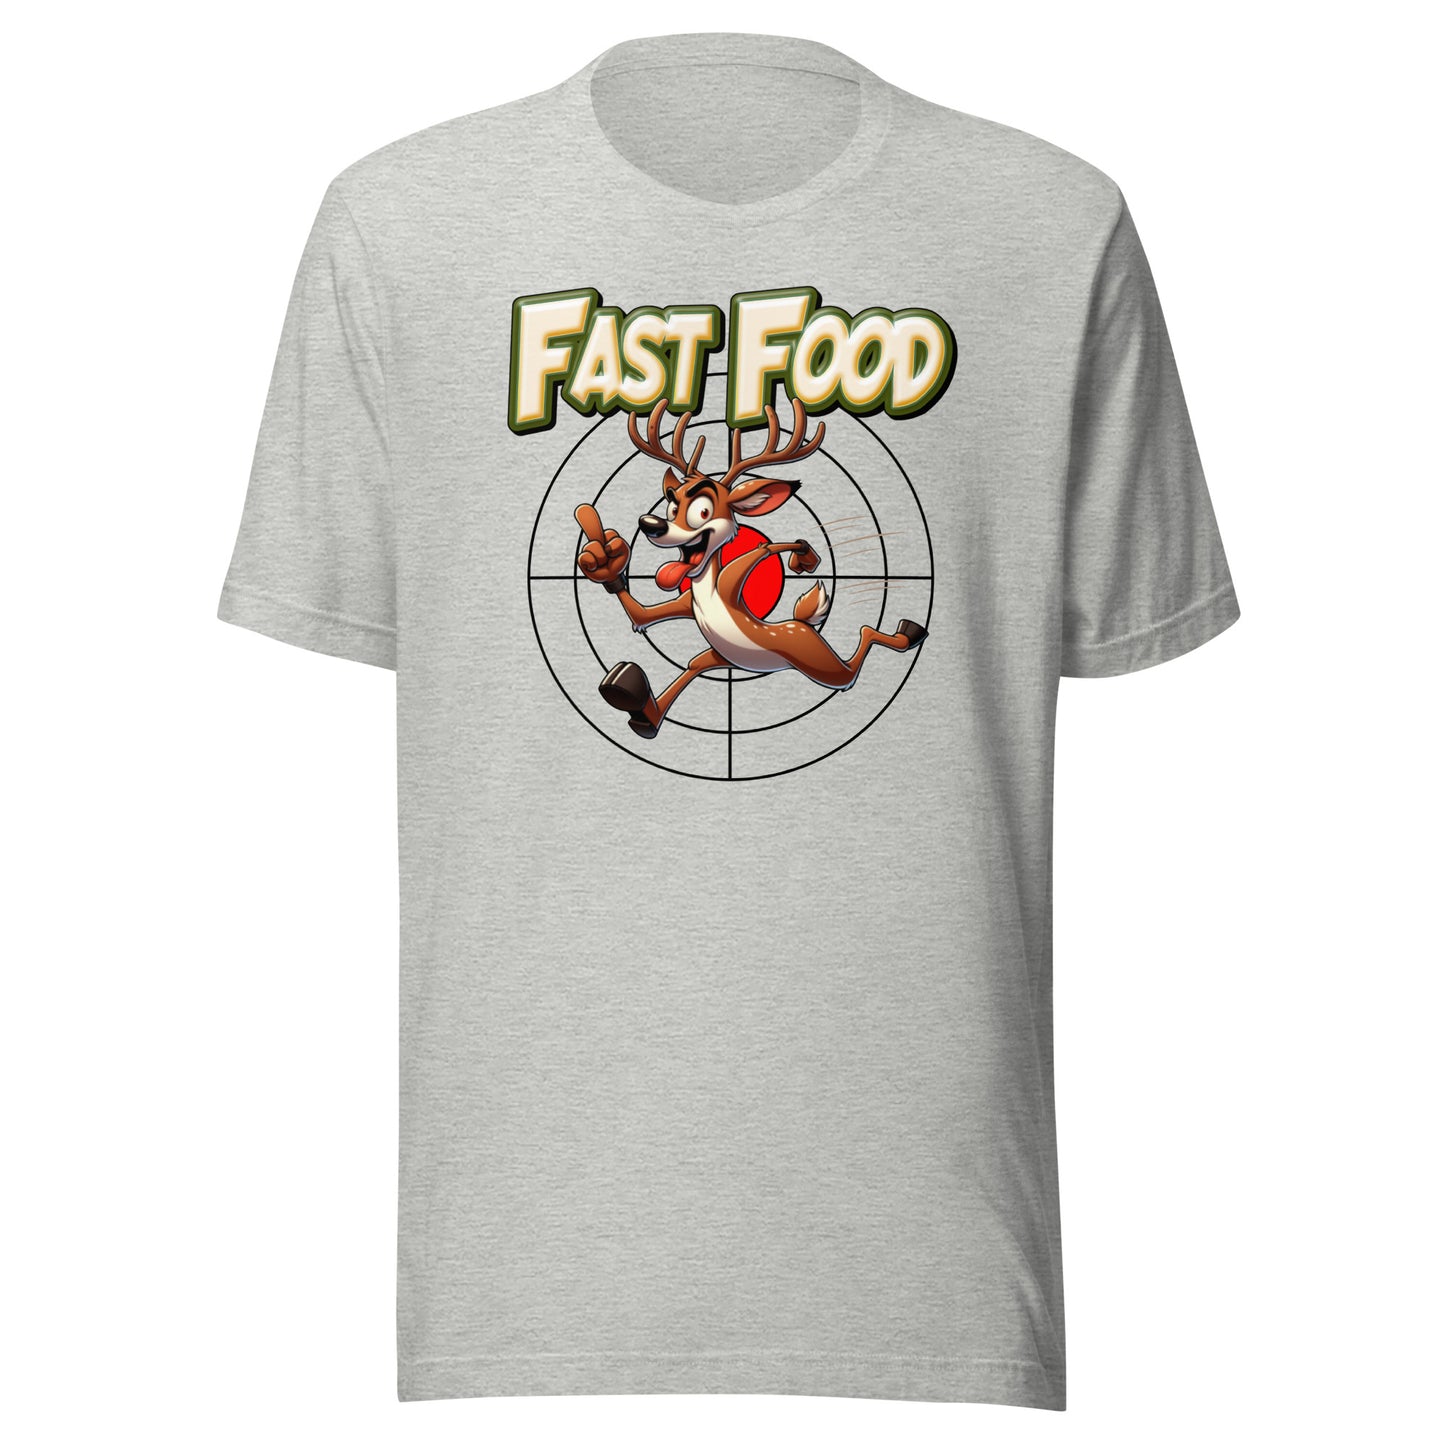 Fast Food Deer Short Sleeve Hunting T-Shirt